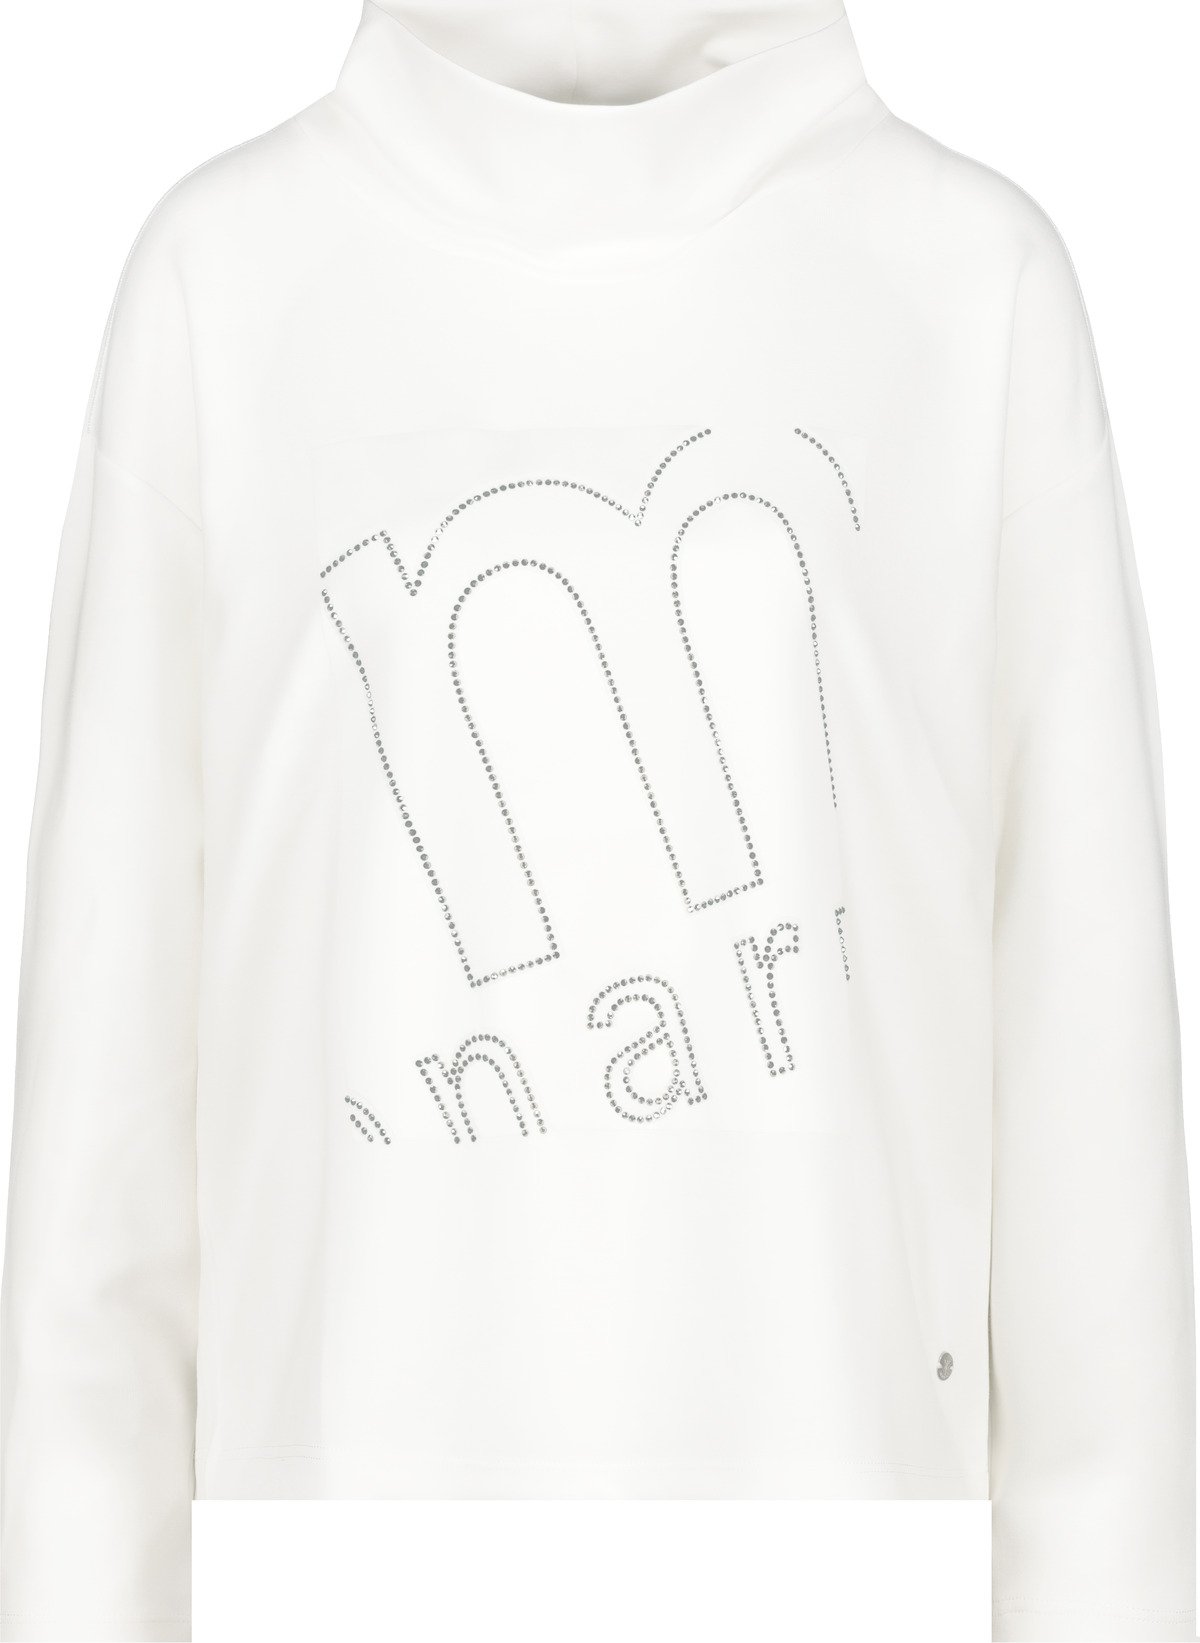 Sweatshirt (Off-white)